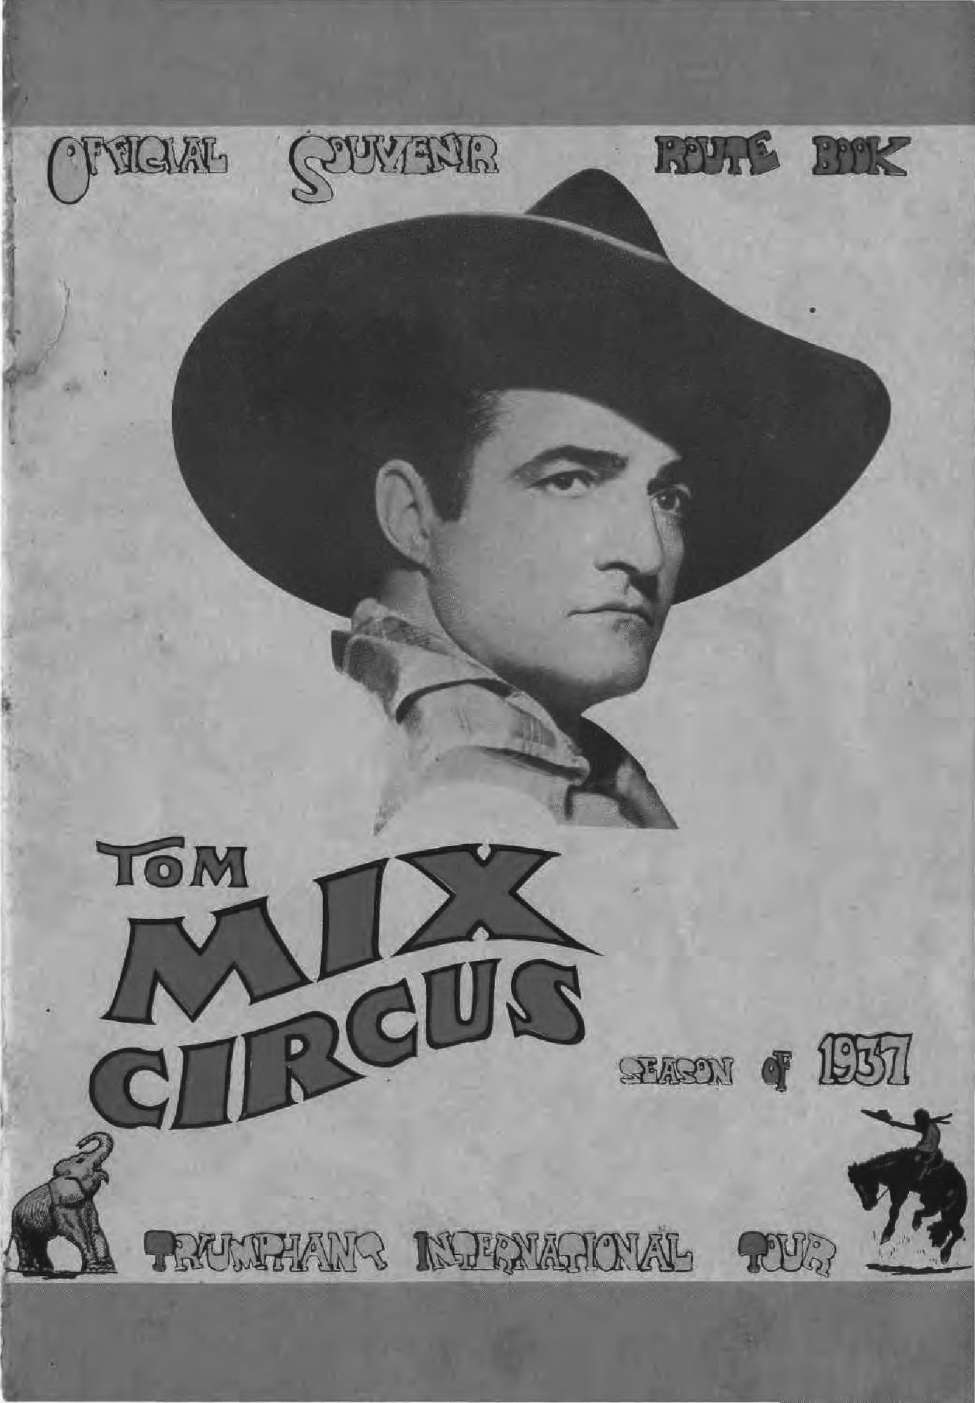 Book Cover For Tom Mix Circus Souvenir Route Book - 1937